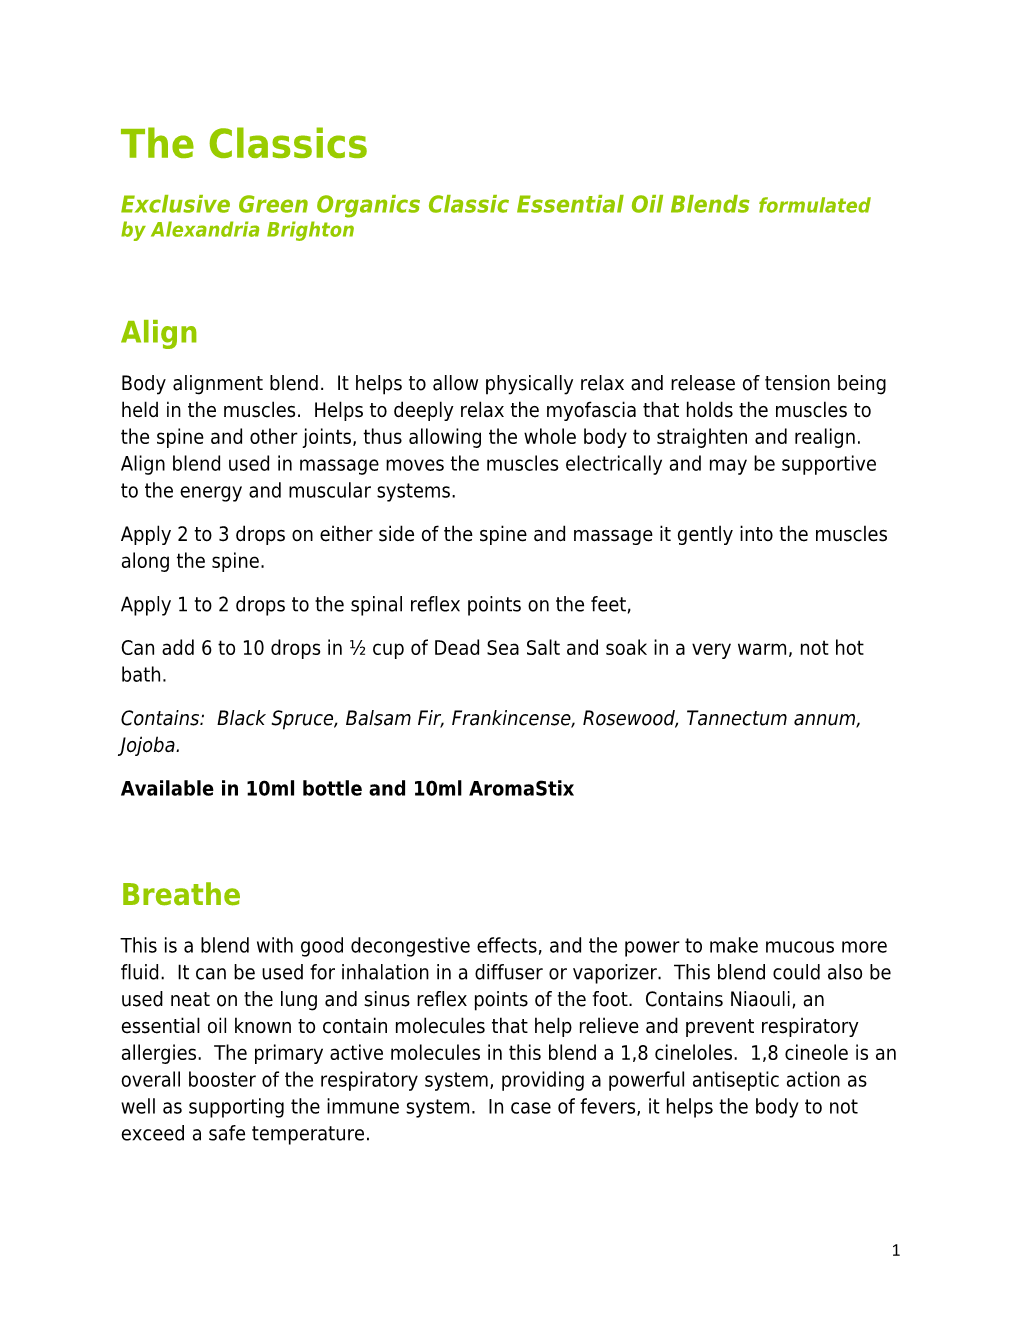 Exclusive Green Organics Classic Essential Oil Blendsformulated by Alexandriabrighton